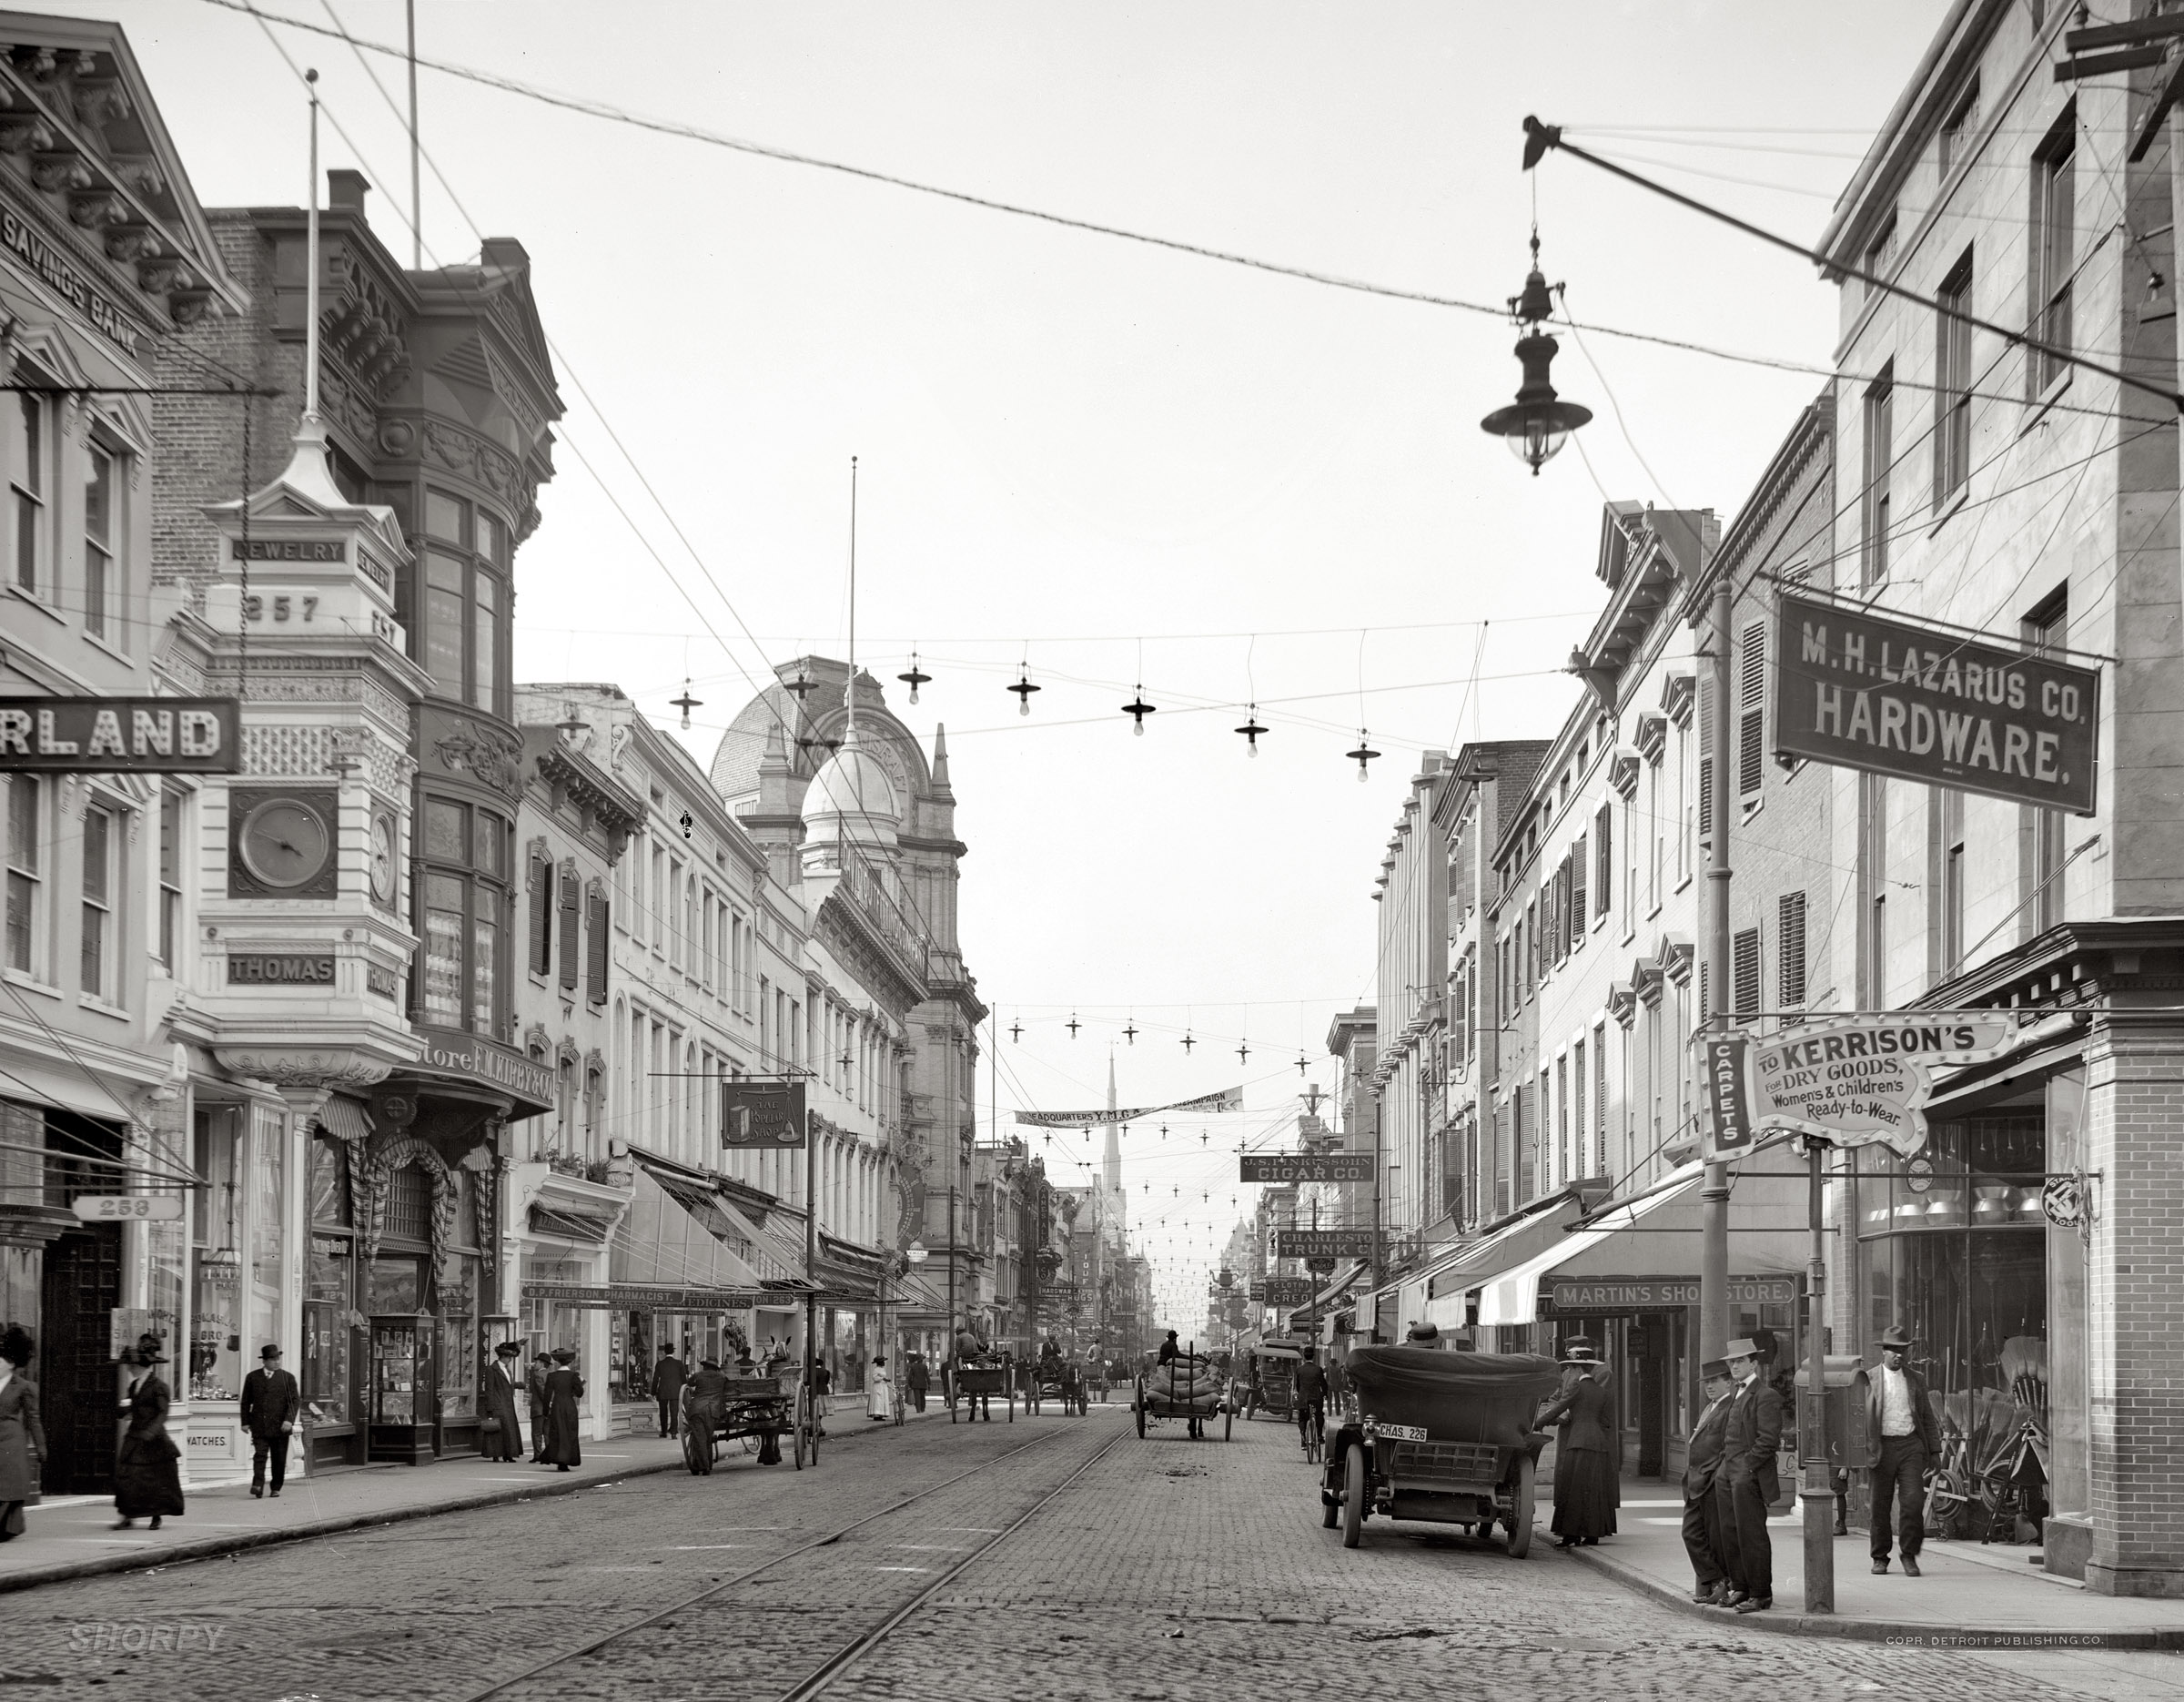 Charleston, South Carolina, circa 1910. "King Street looking north." Detroit Publishing Co. glass negative, Library of Congress. View full size.